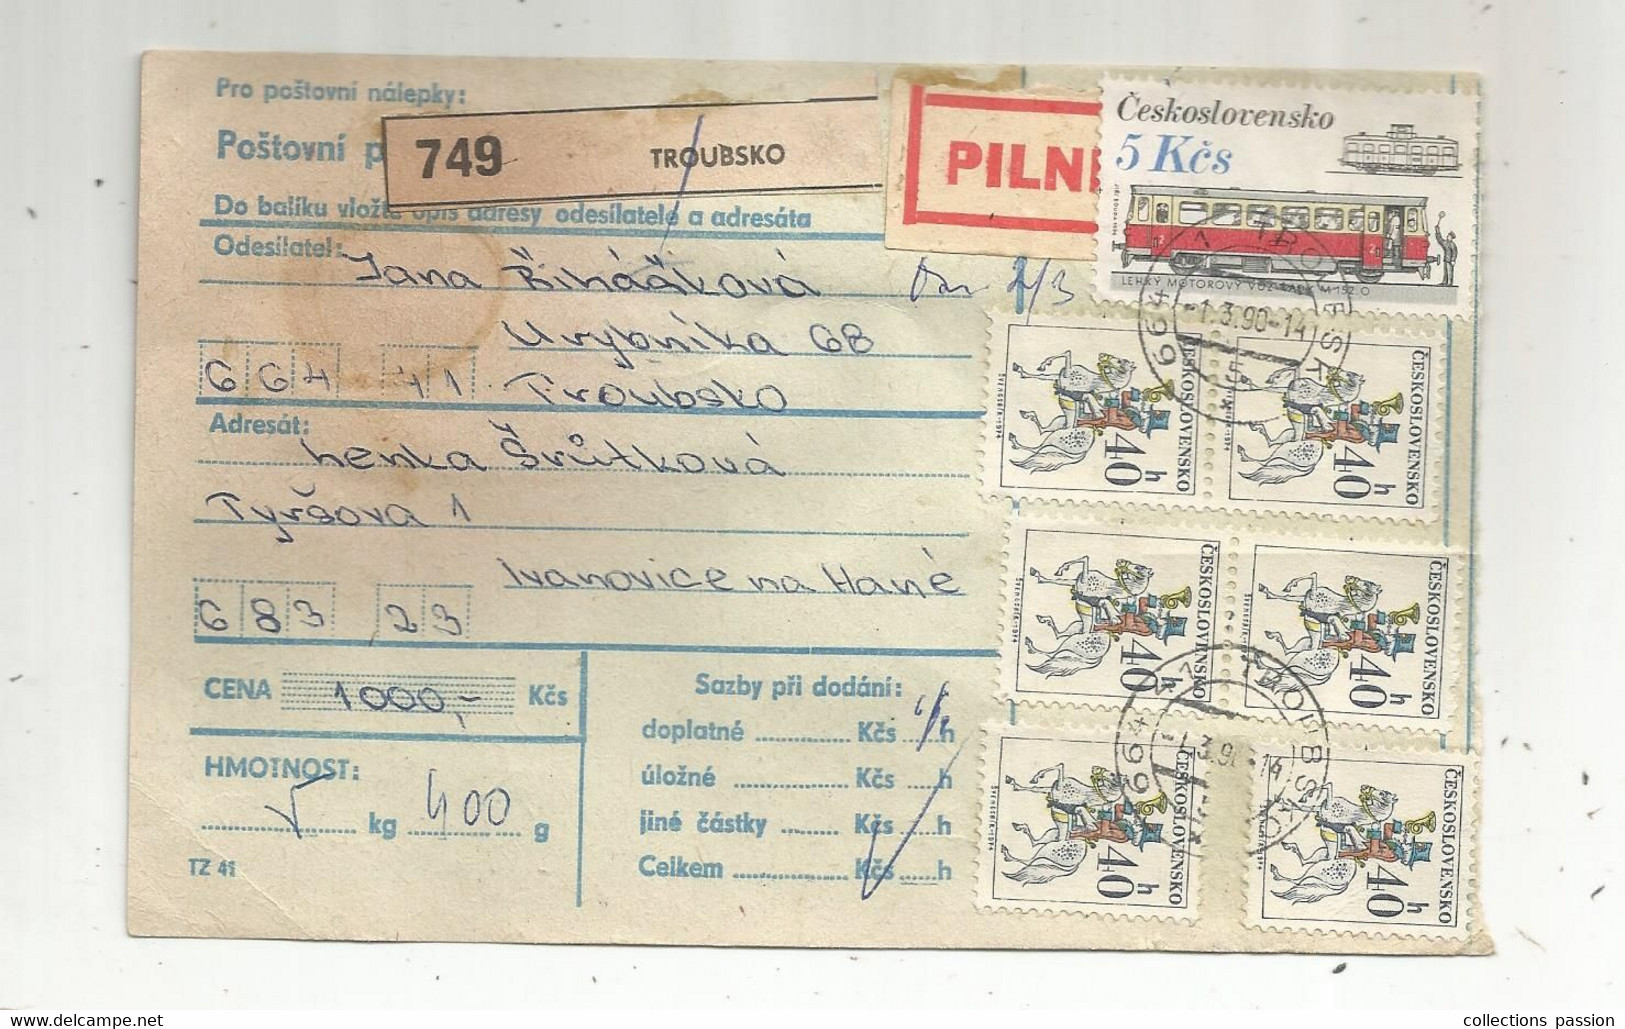 CESLOSLOVENSKO , 749 TROUBSKO ,PILNE SURNE ,1990 , Ivanovice Na Hané , 2 Scans , Frais Fr 1.55 E - Covers & Documents